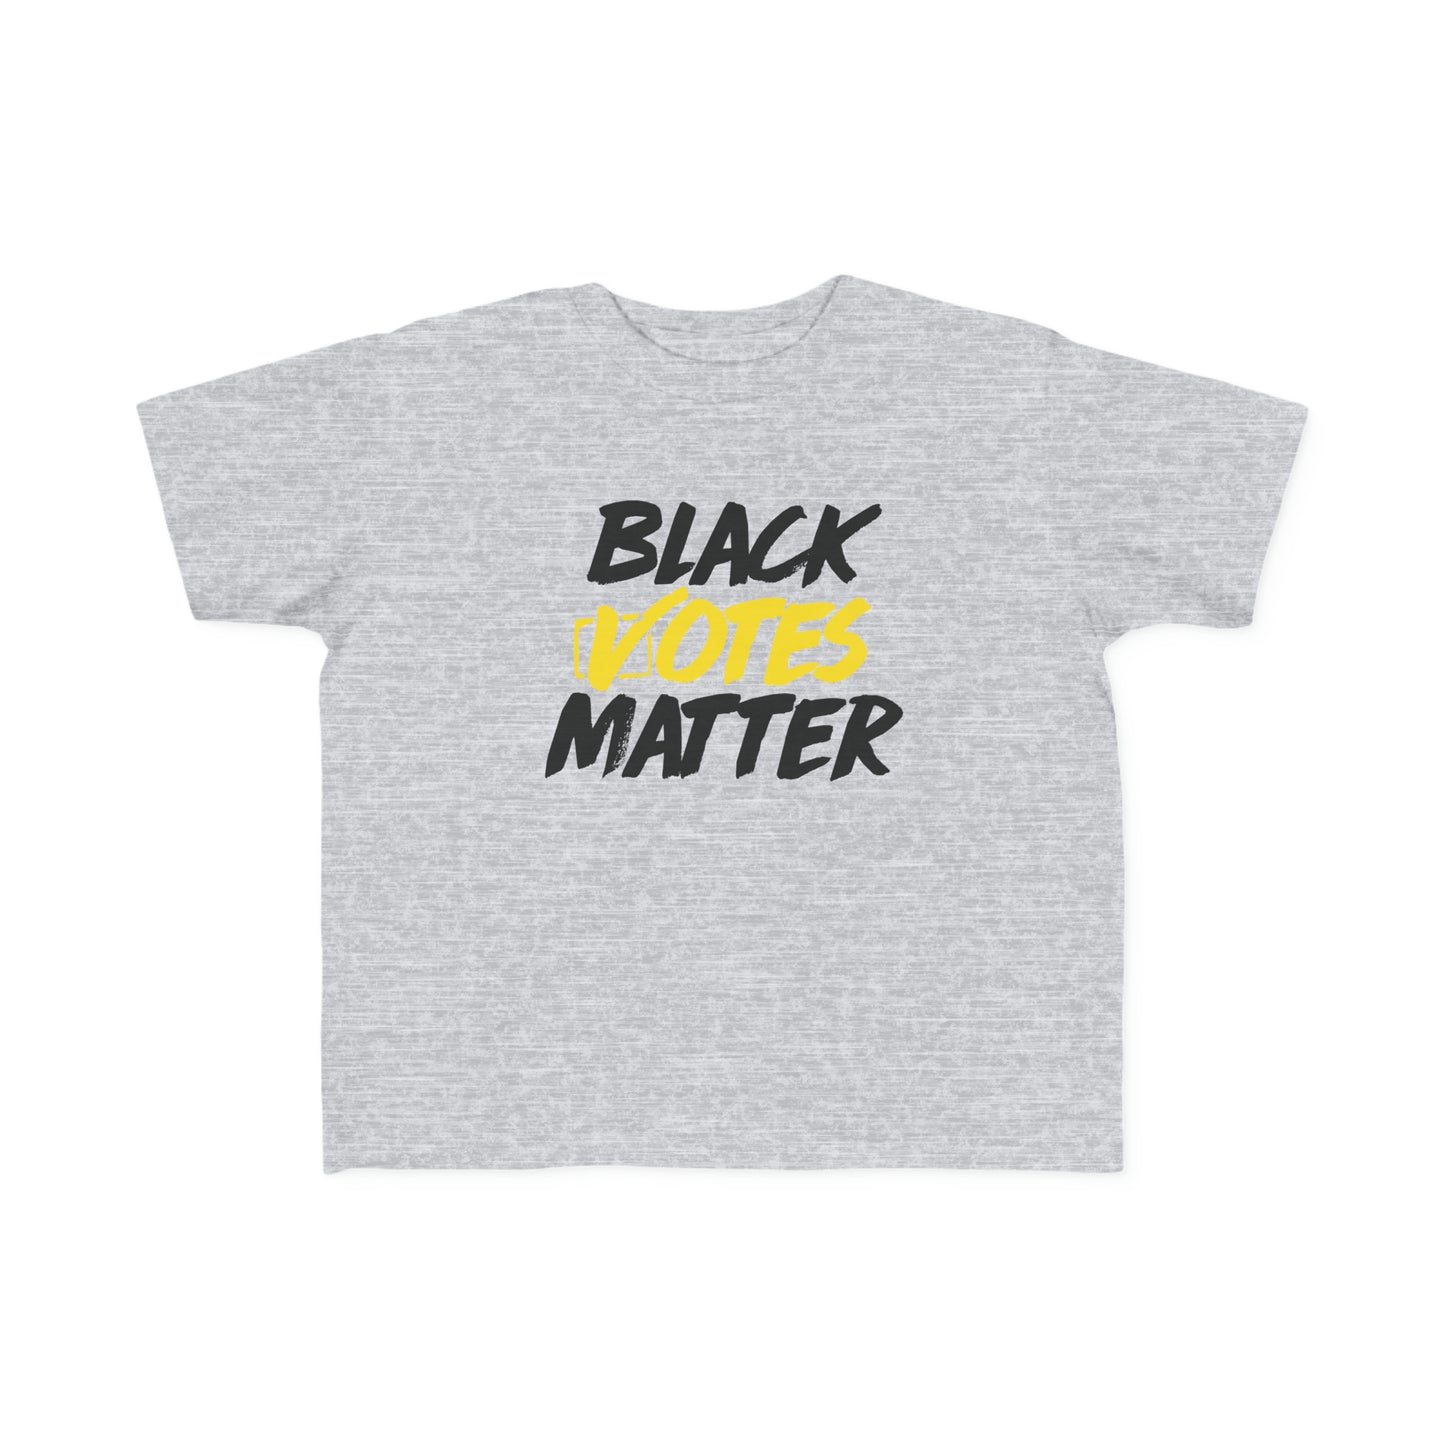 “Black Votes Matter (white text)” Toddler's Tee